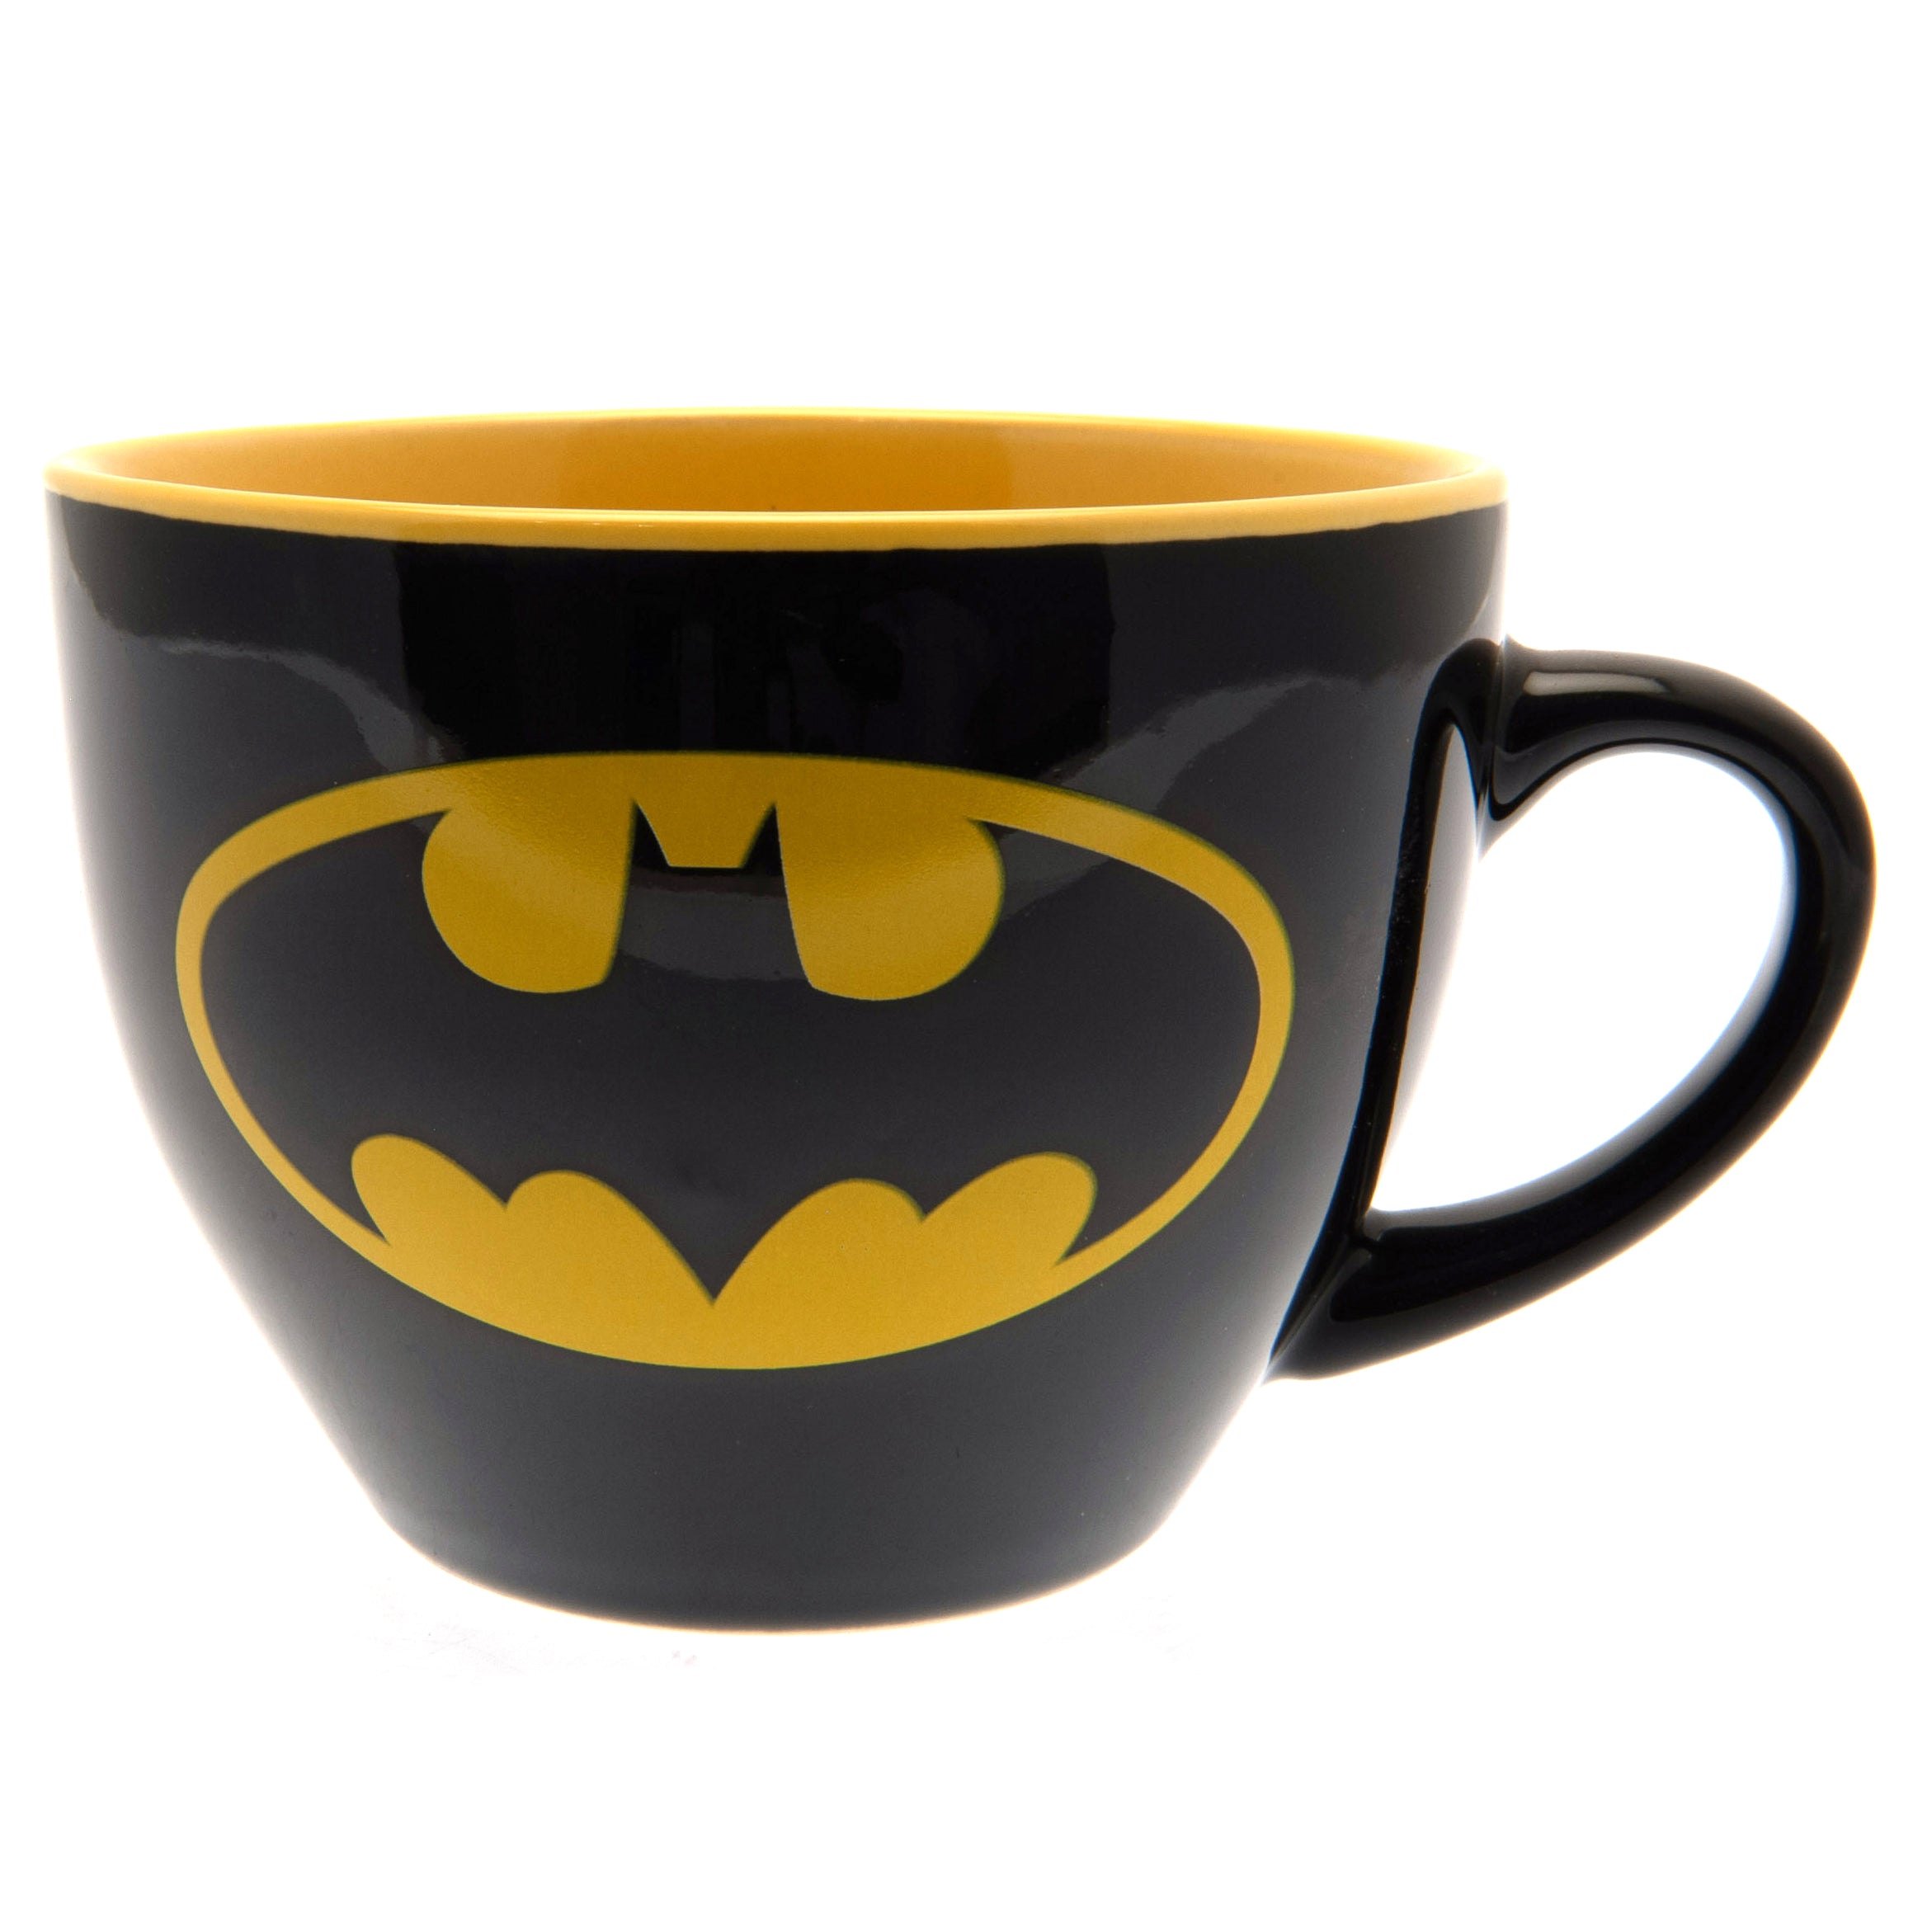 View Batman Cappuccino Mug information